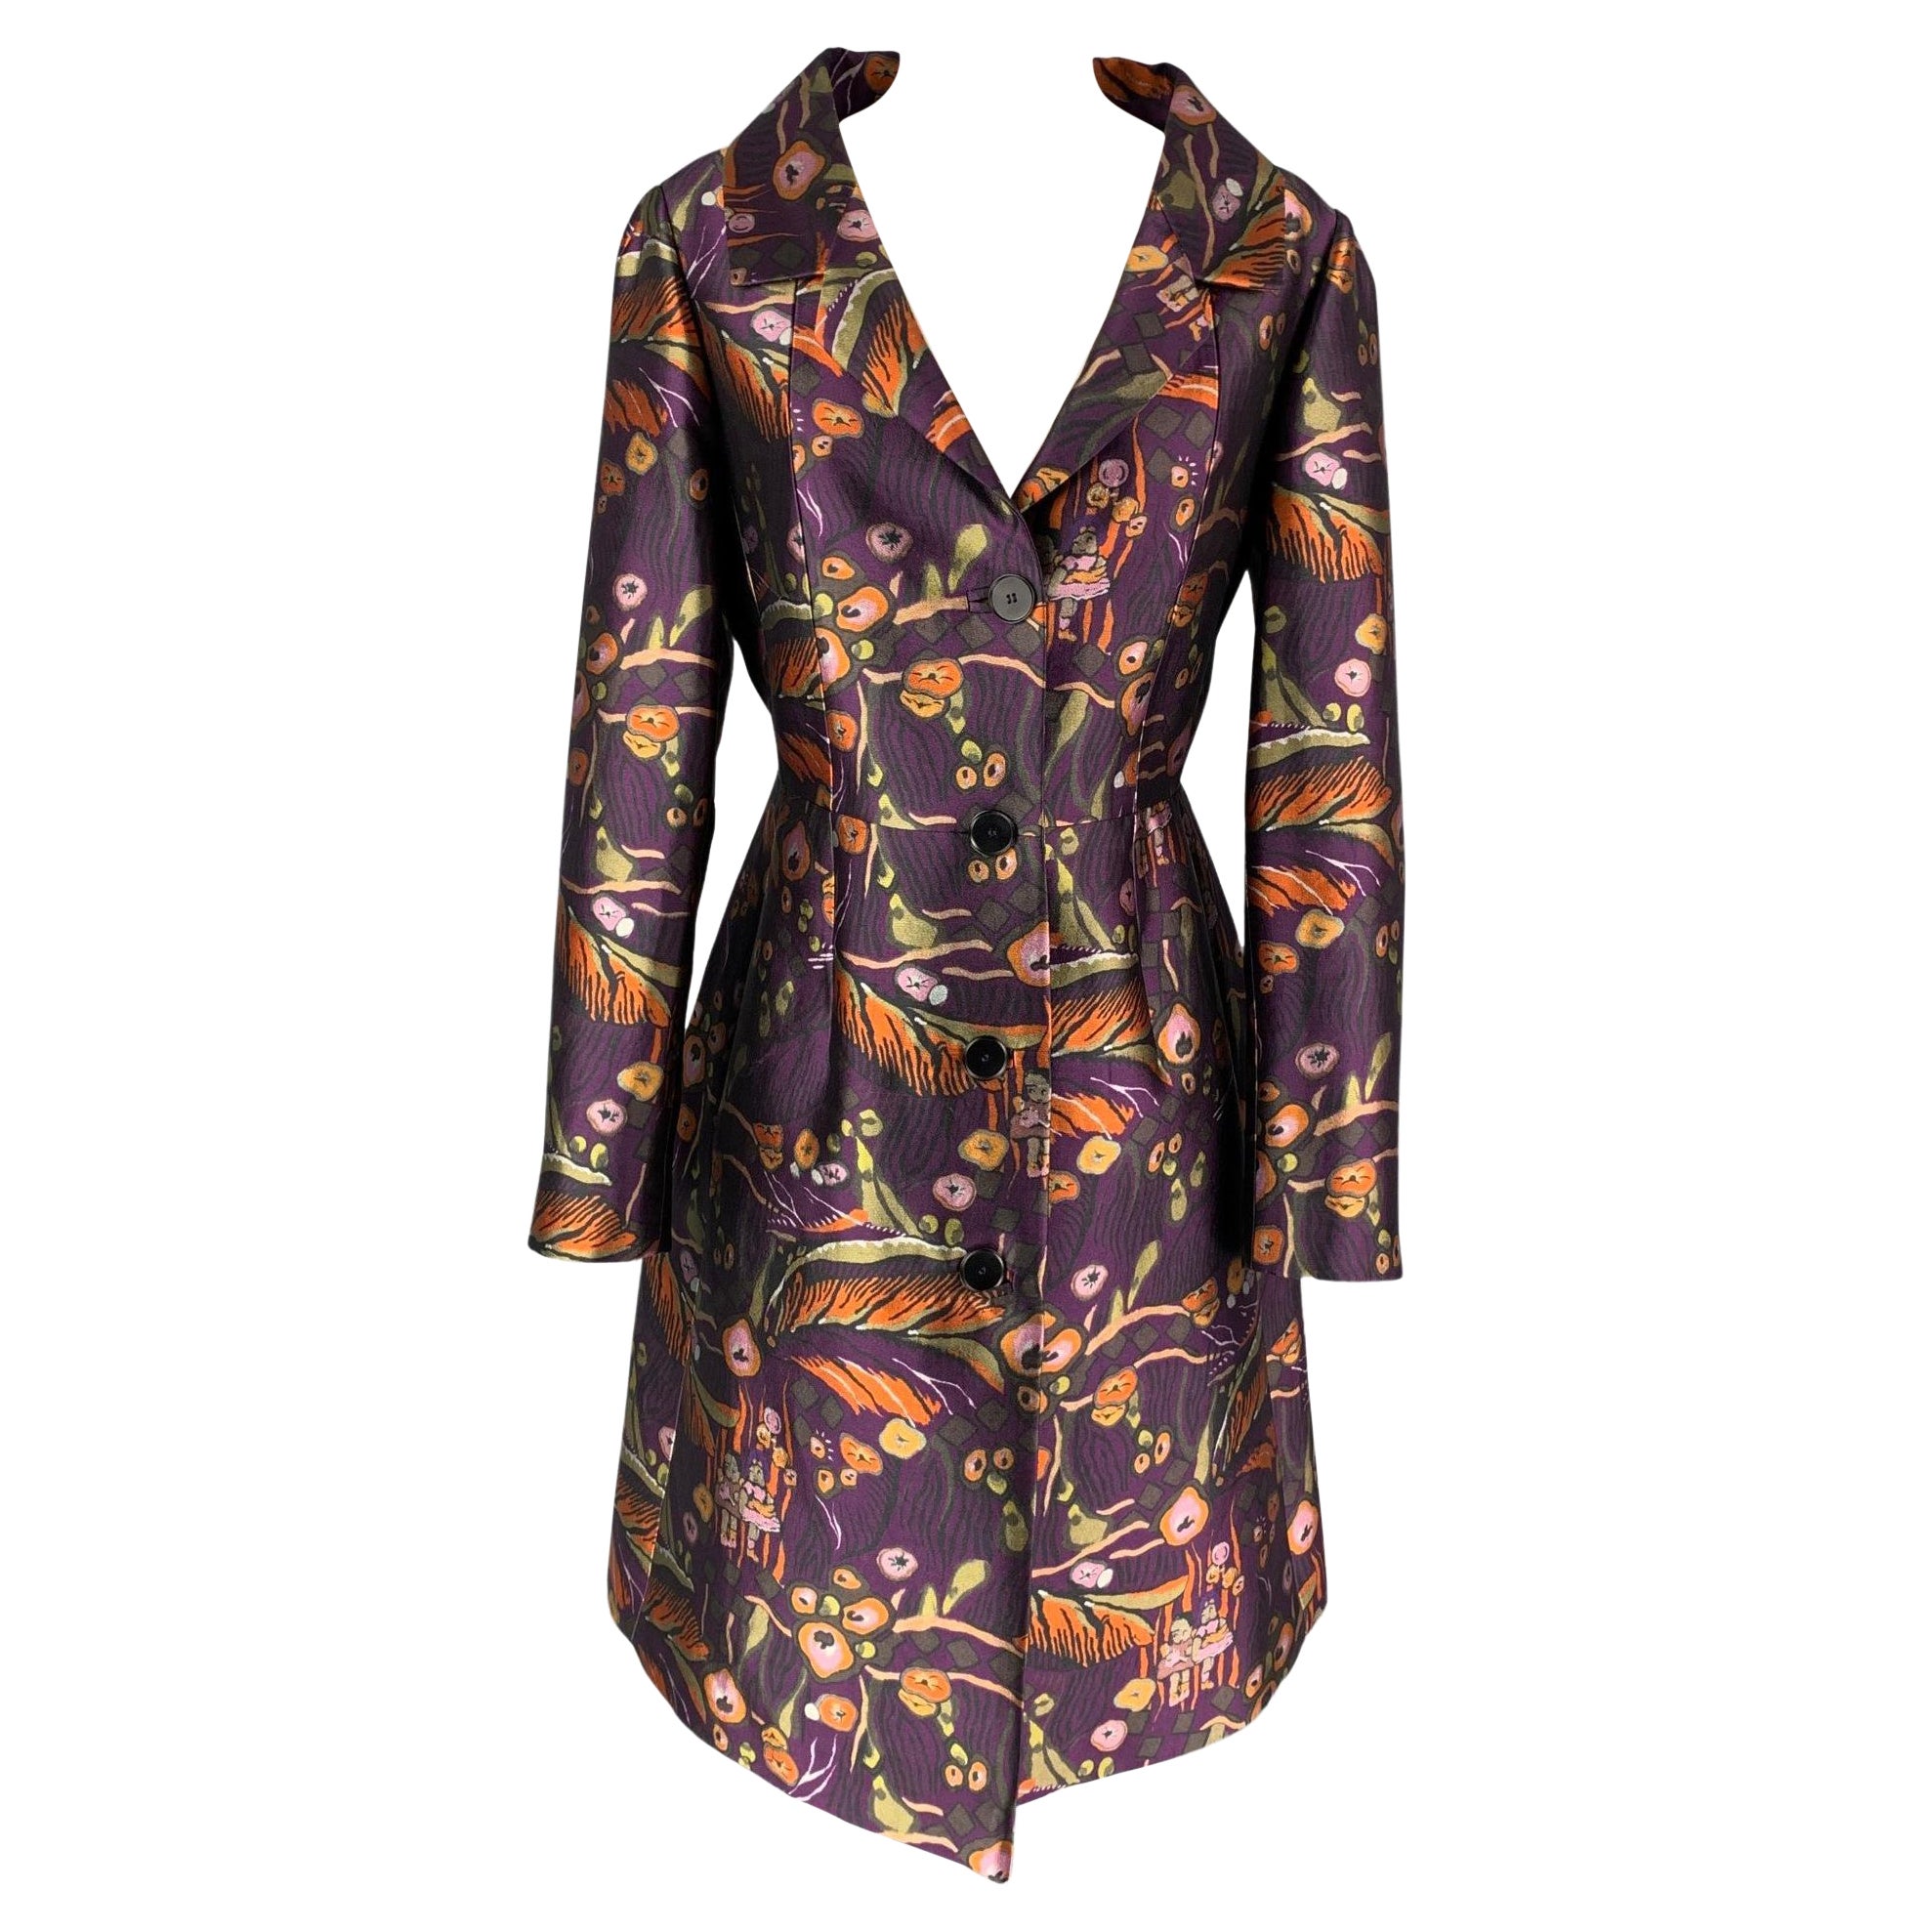 ROCHAS Size 4 Multi-Color Floral Wool / Silk Floral A-line Coat